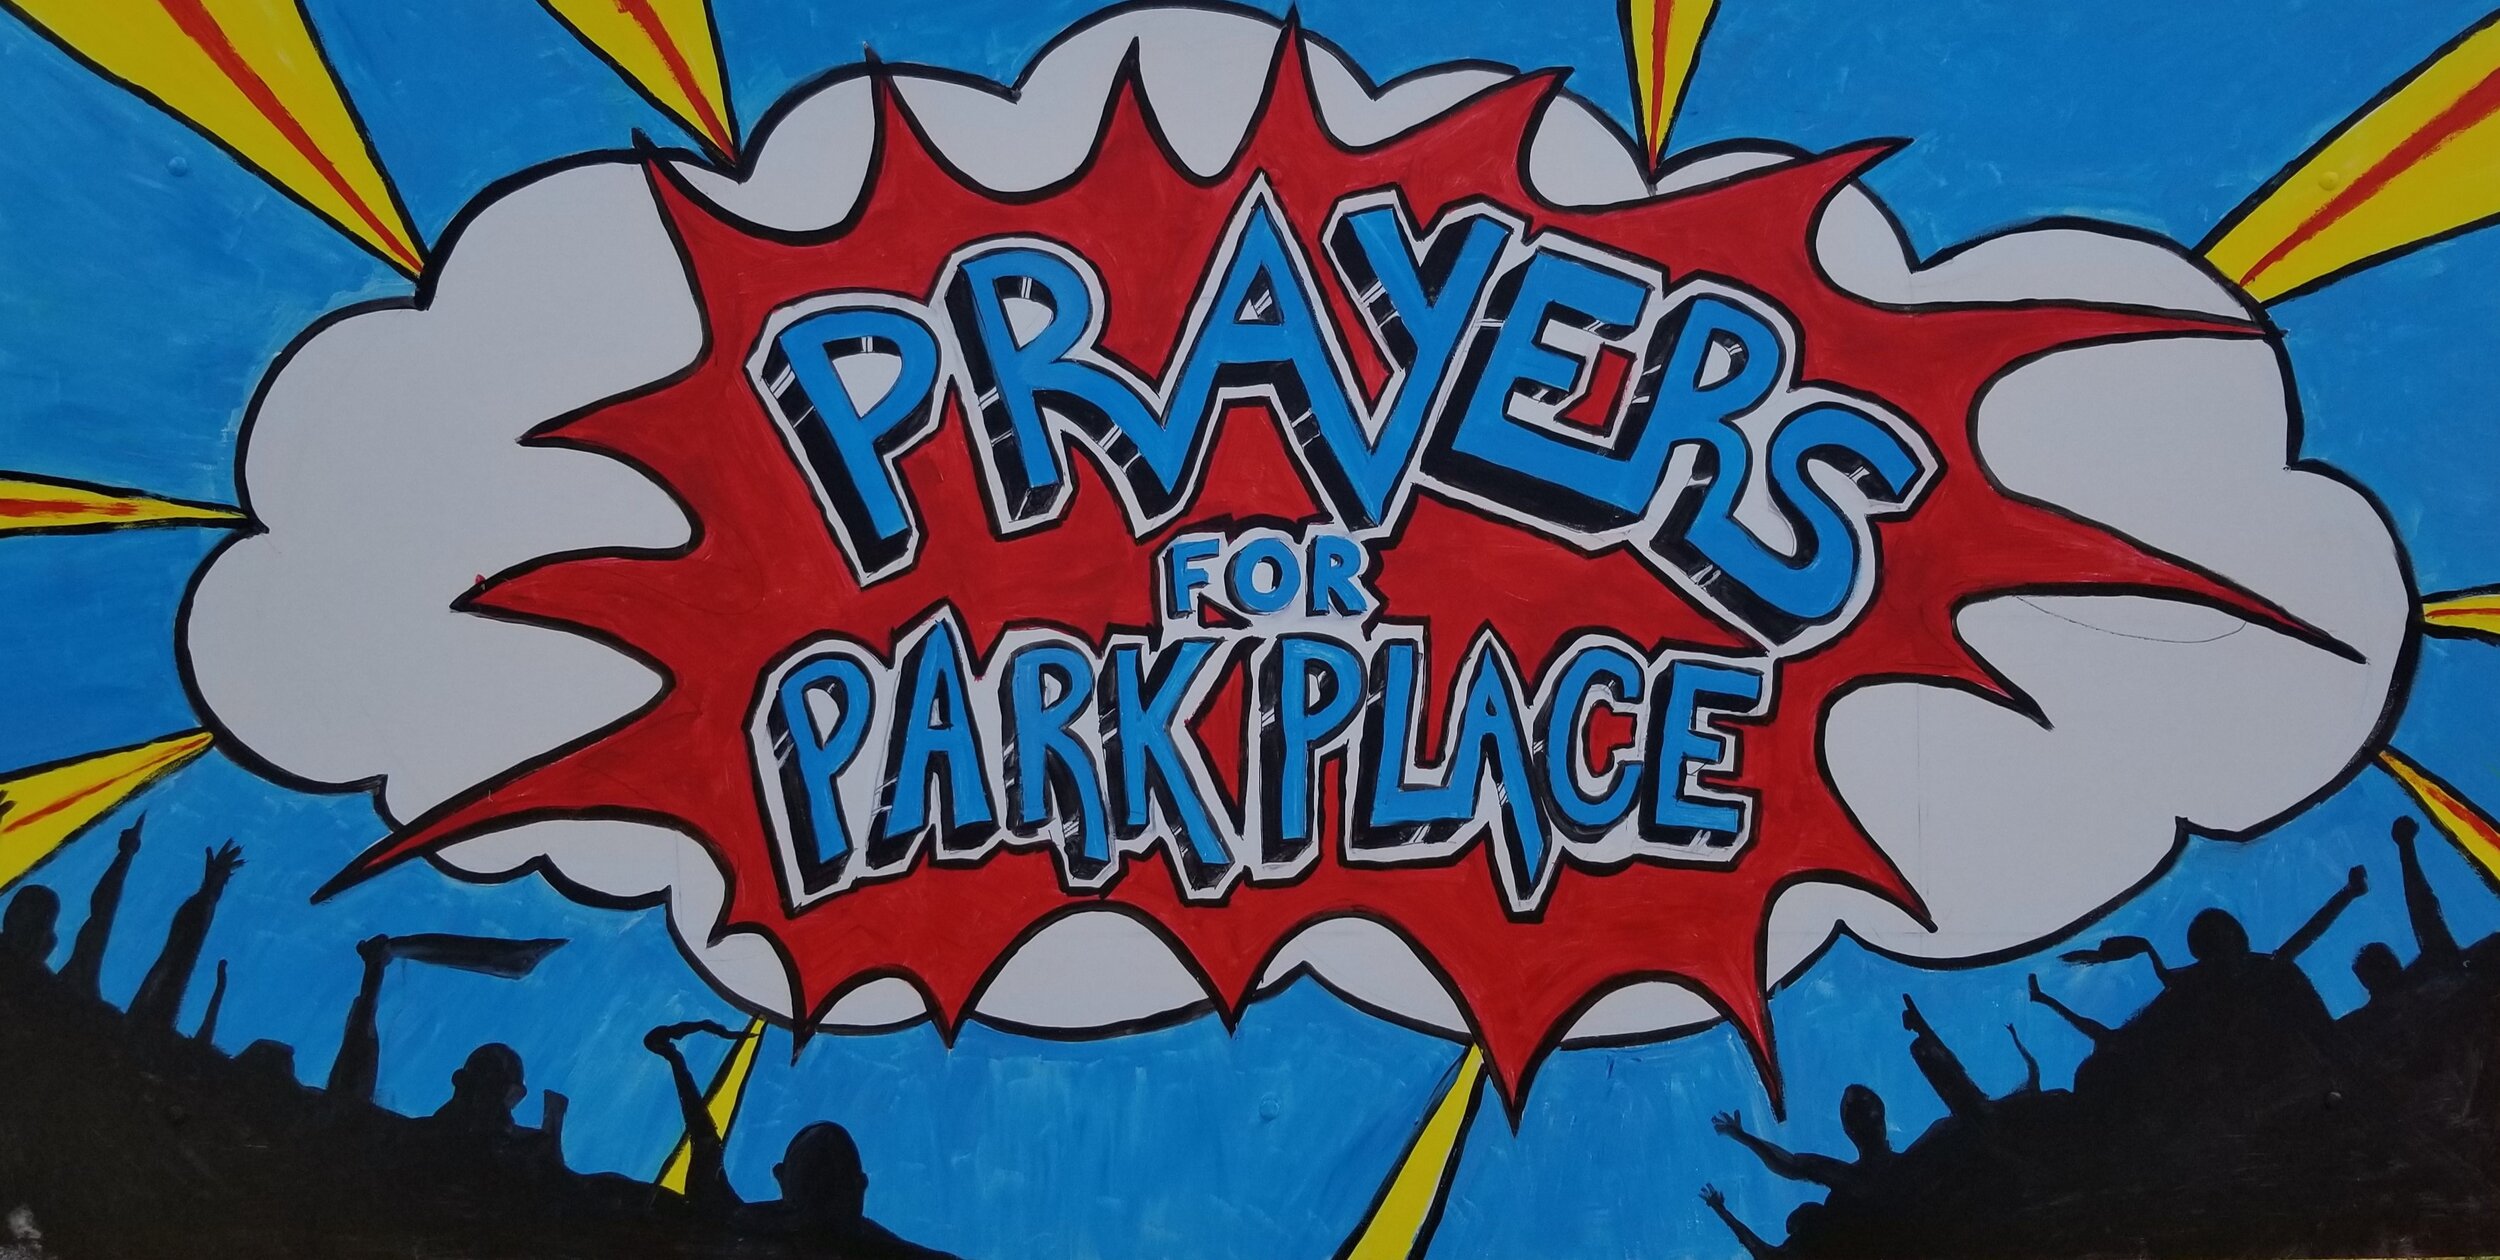 Prayers For Park Place